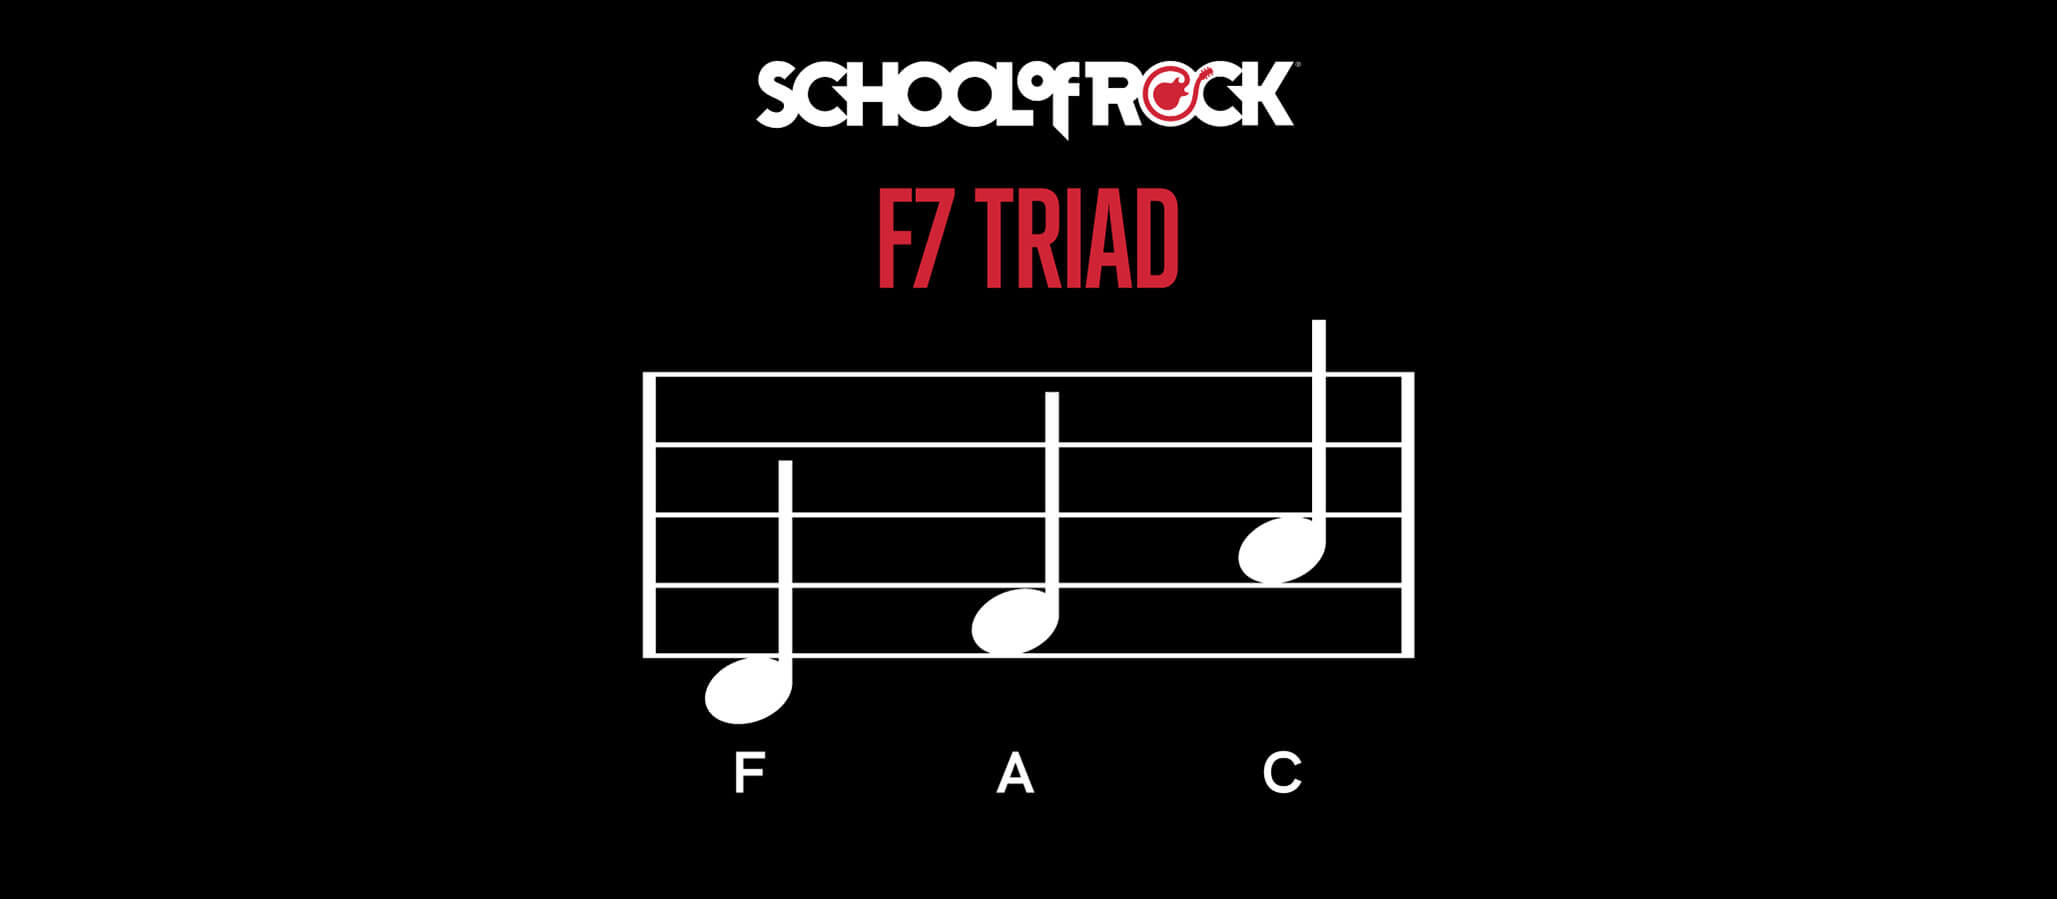 Measure 1 has the F7 triad: F A C